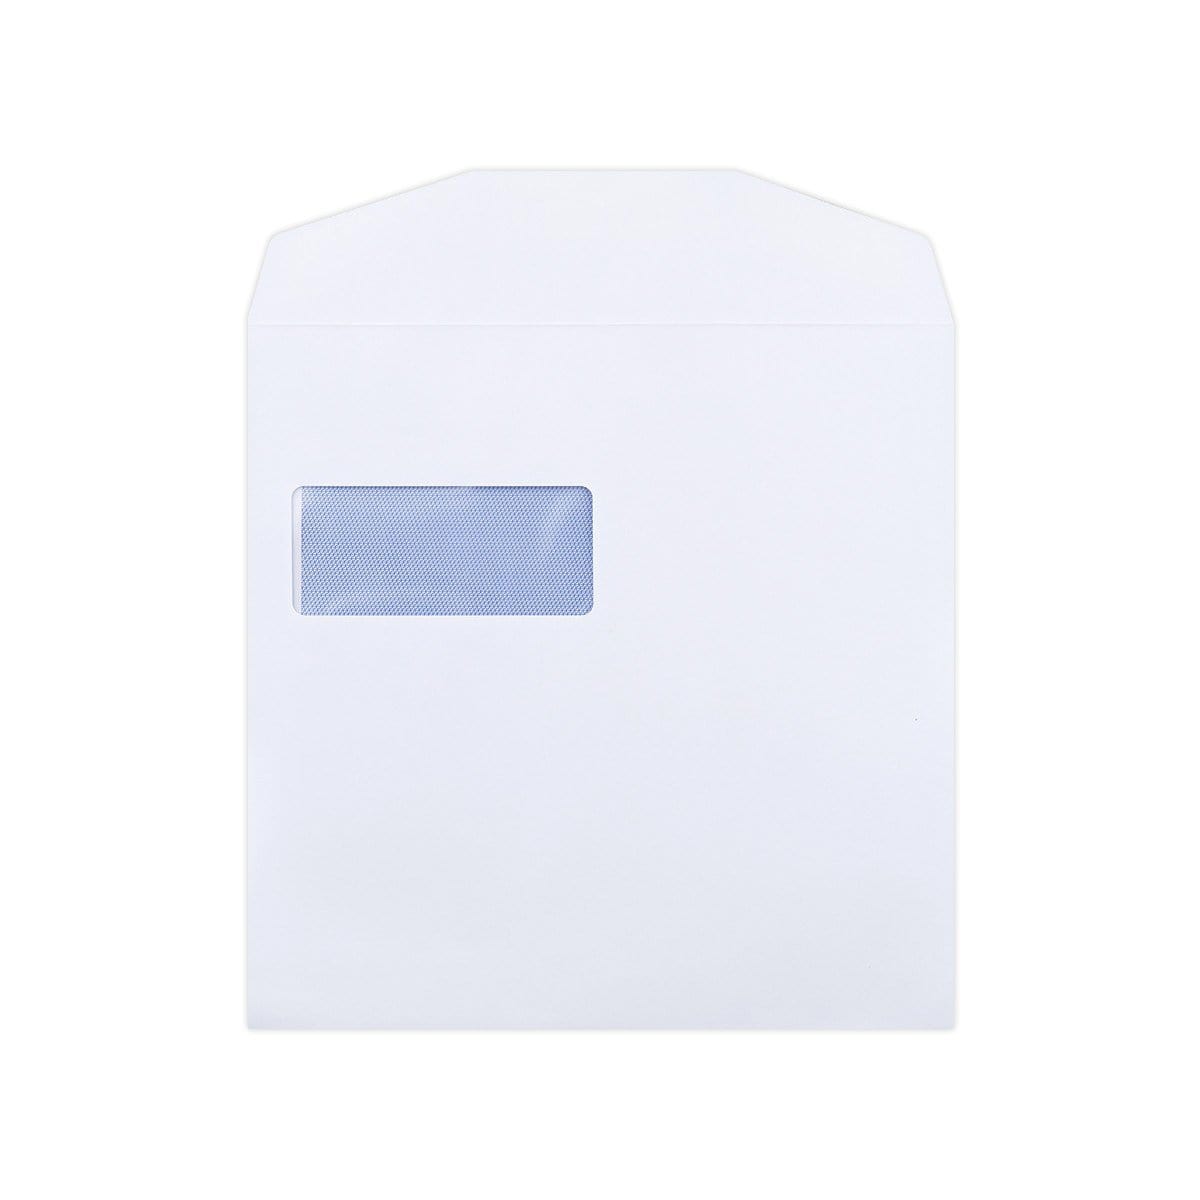 products/220x220-white-window-selfseal-envelopes.jpg